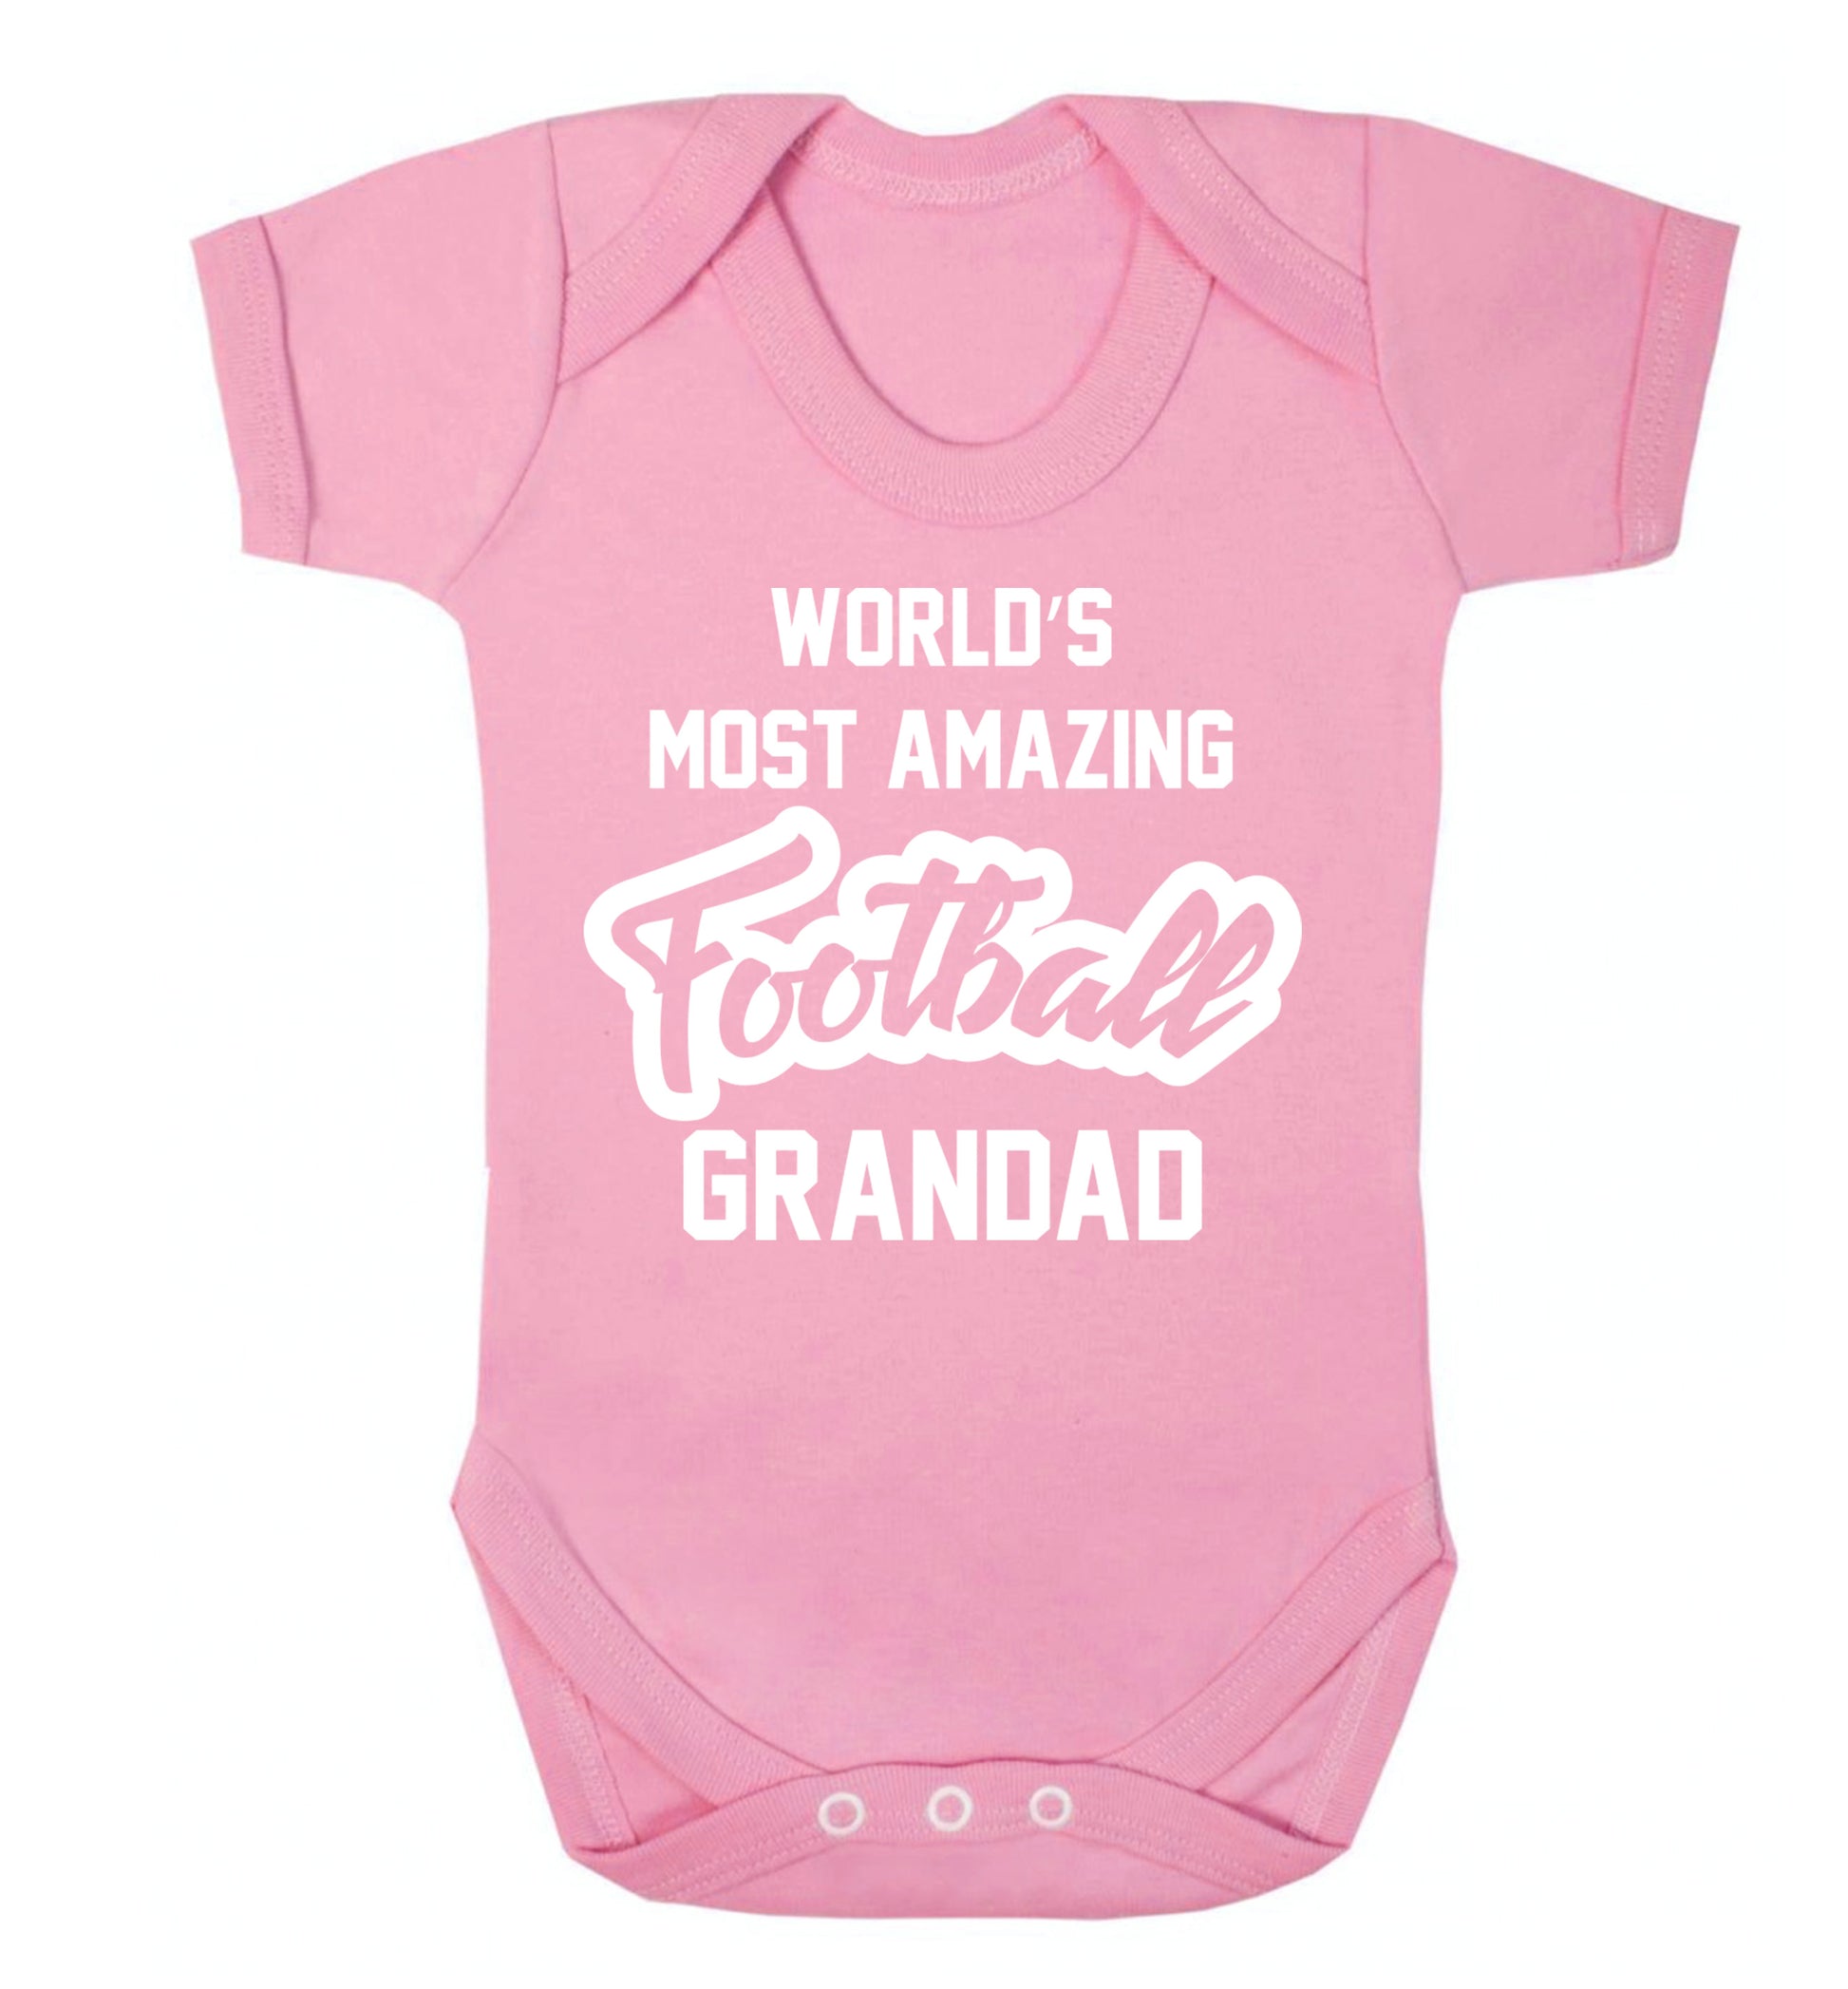 Worlds most amazing football grandad Baby Vest pale pink 18-24 months